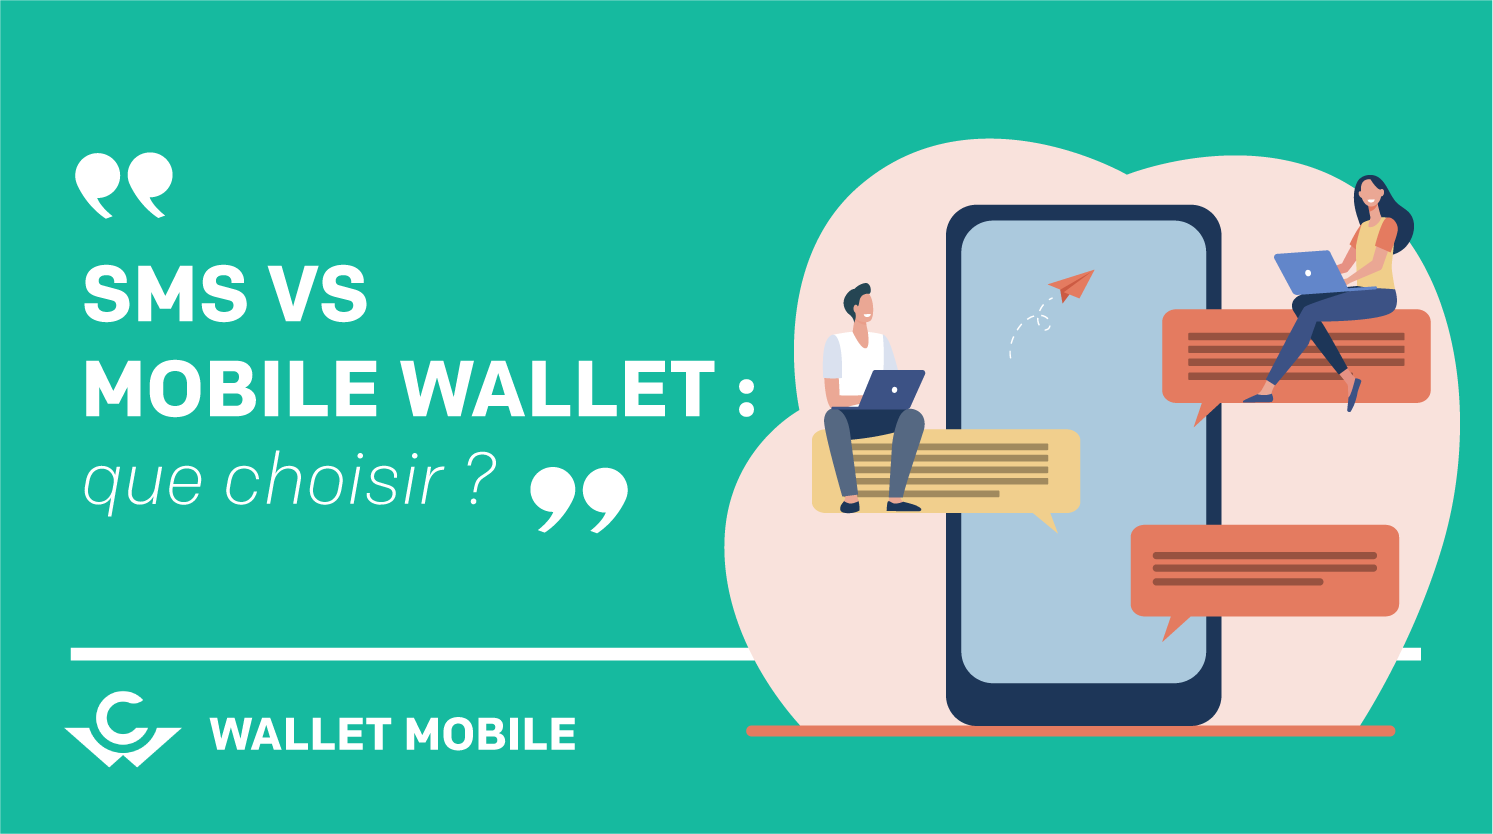 sms vs wallet mobile